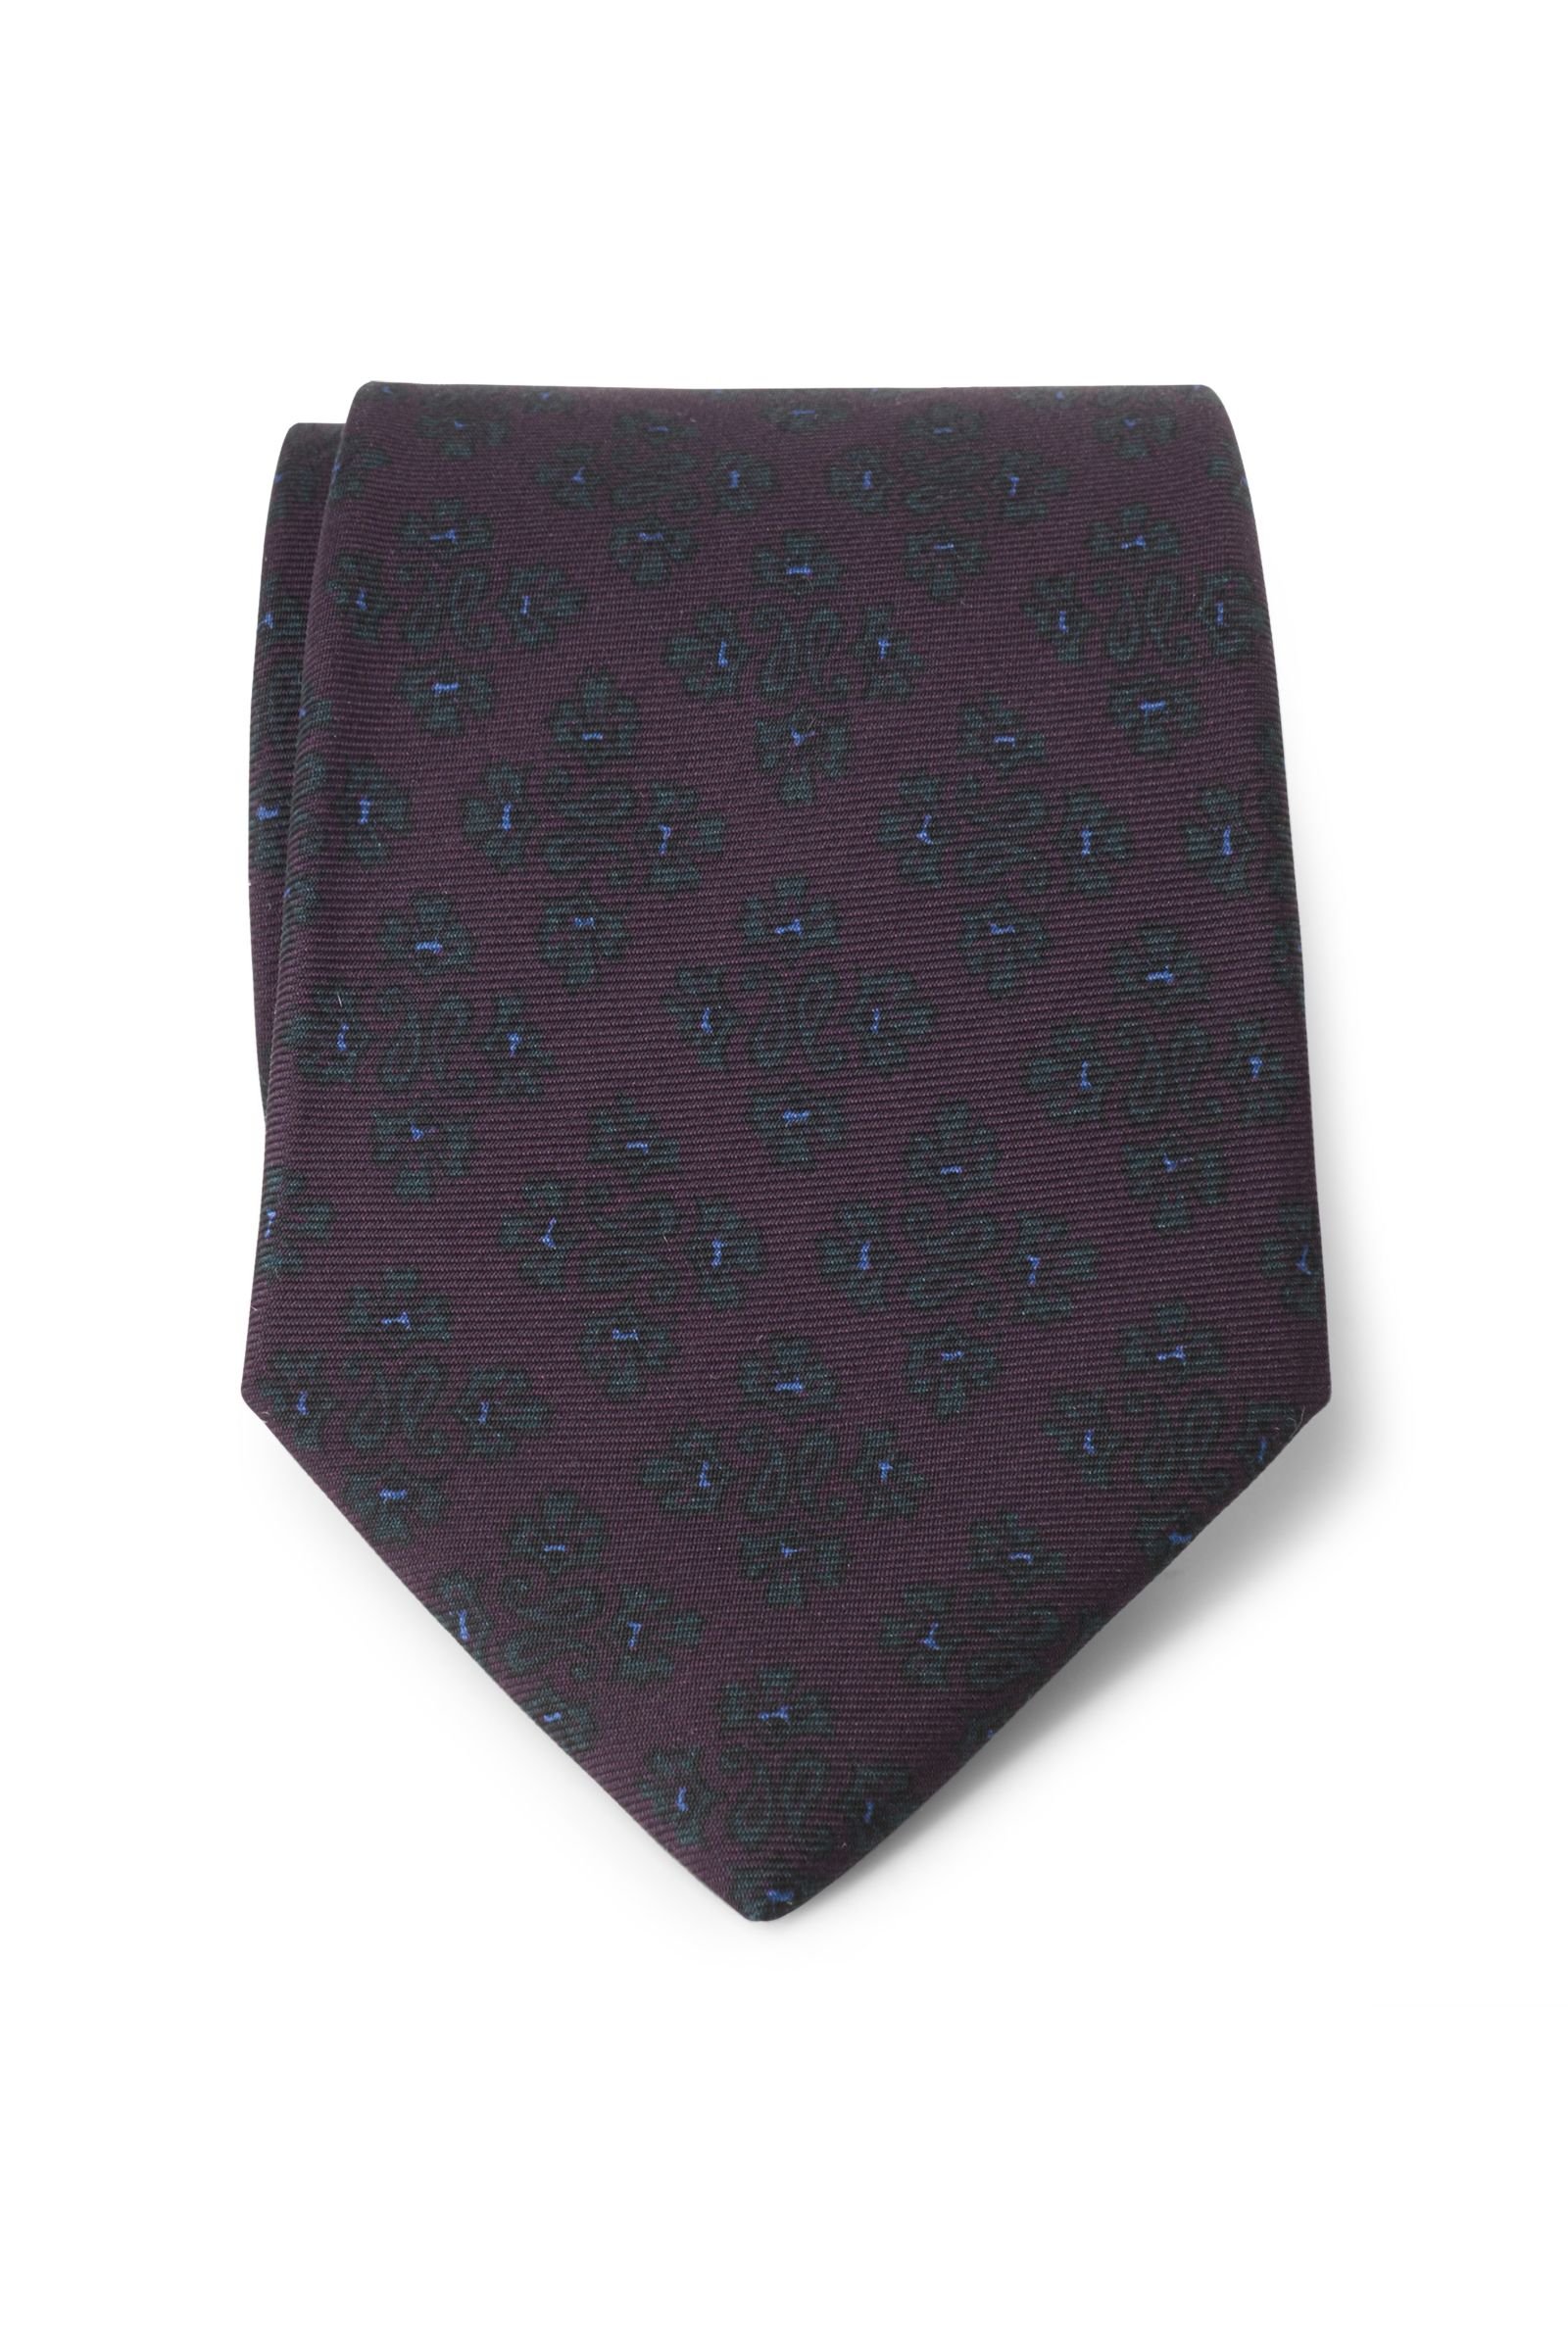 Silk tie burgundy/dark green patterned